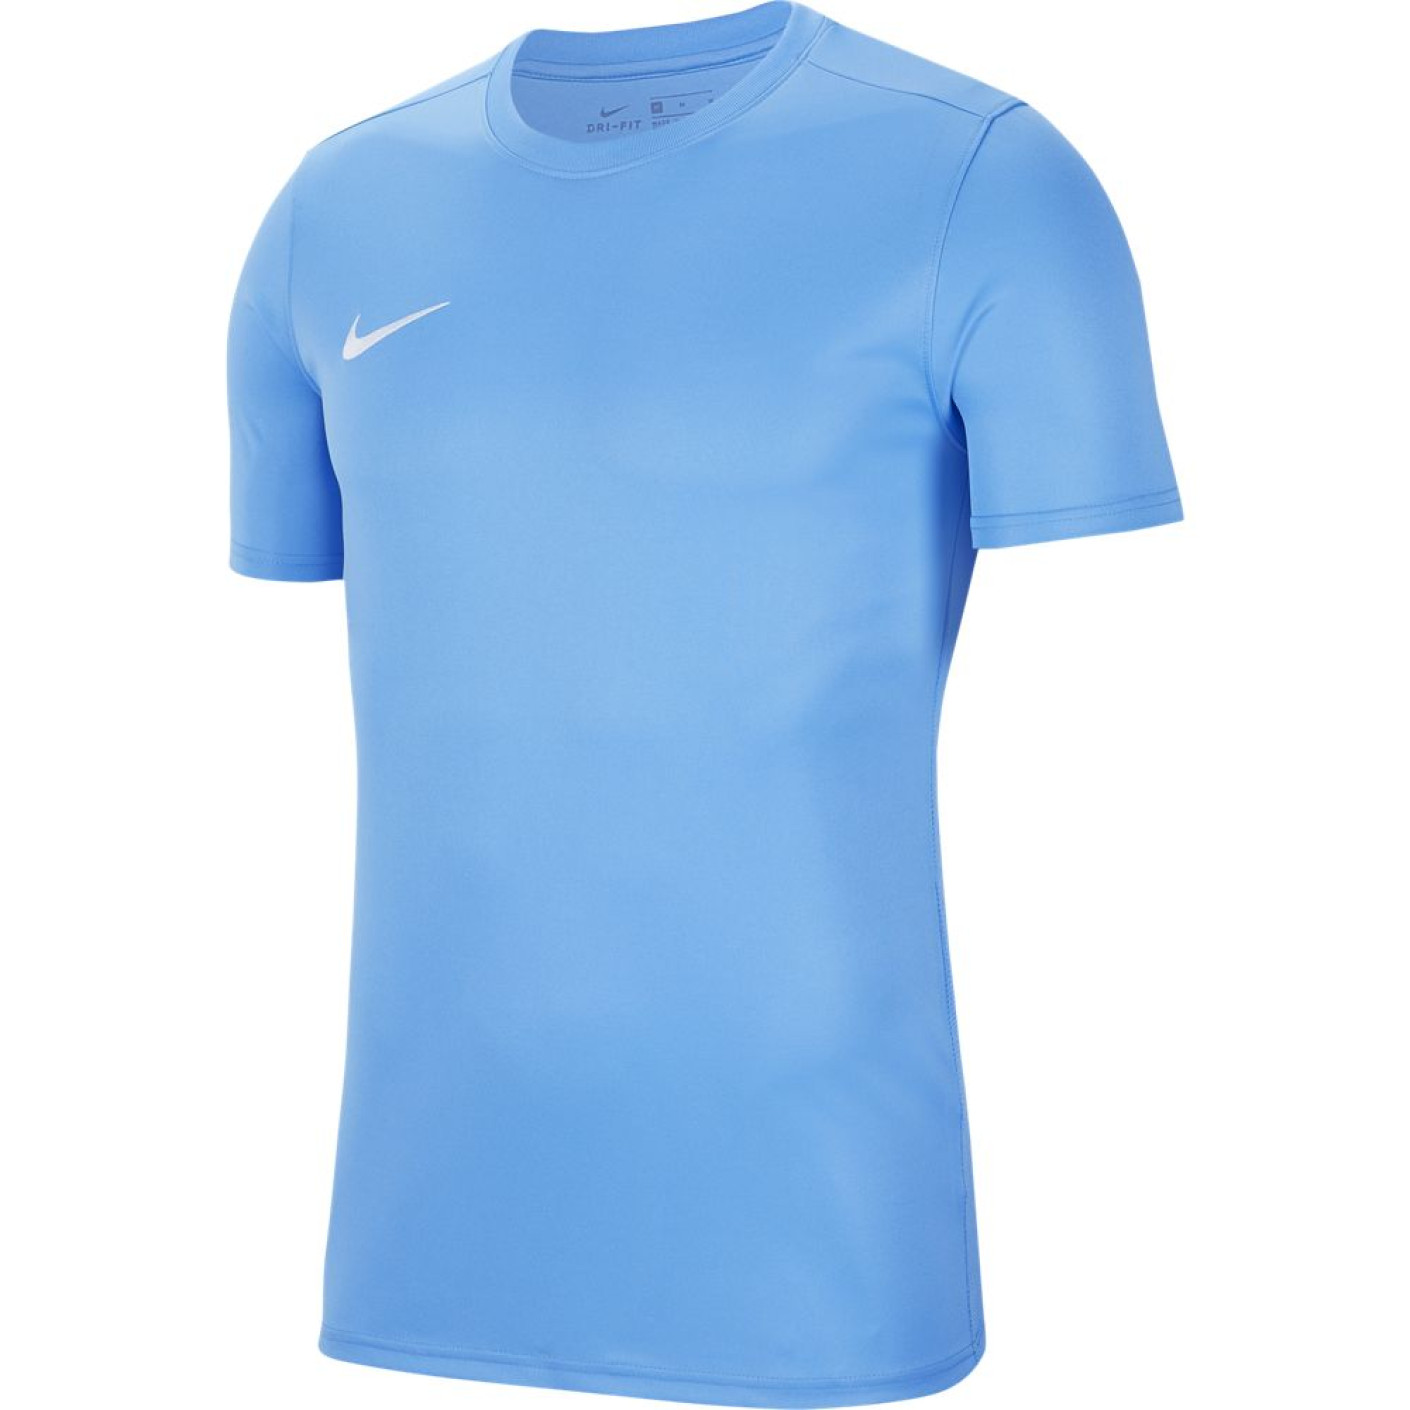 Nike Dry Park VII Light Blue Football Shirt